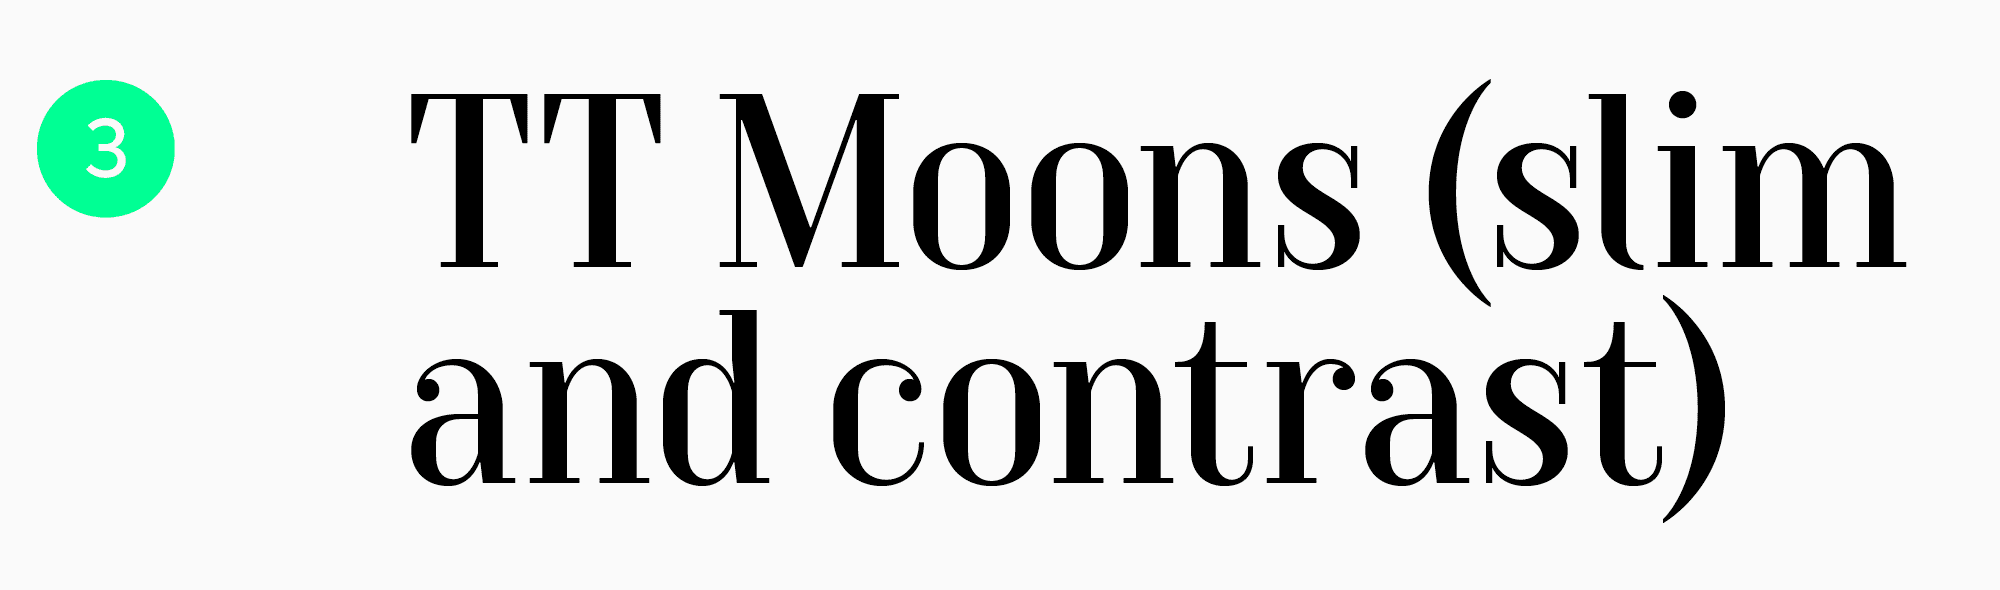 good header fonts TT Moons